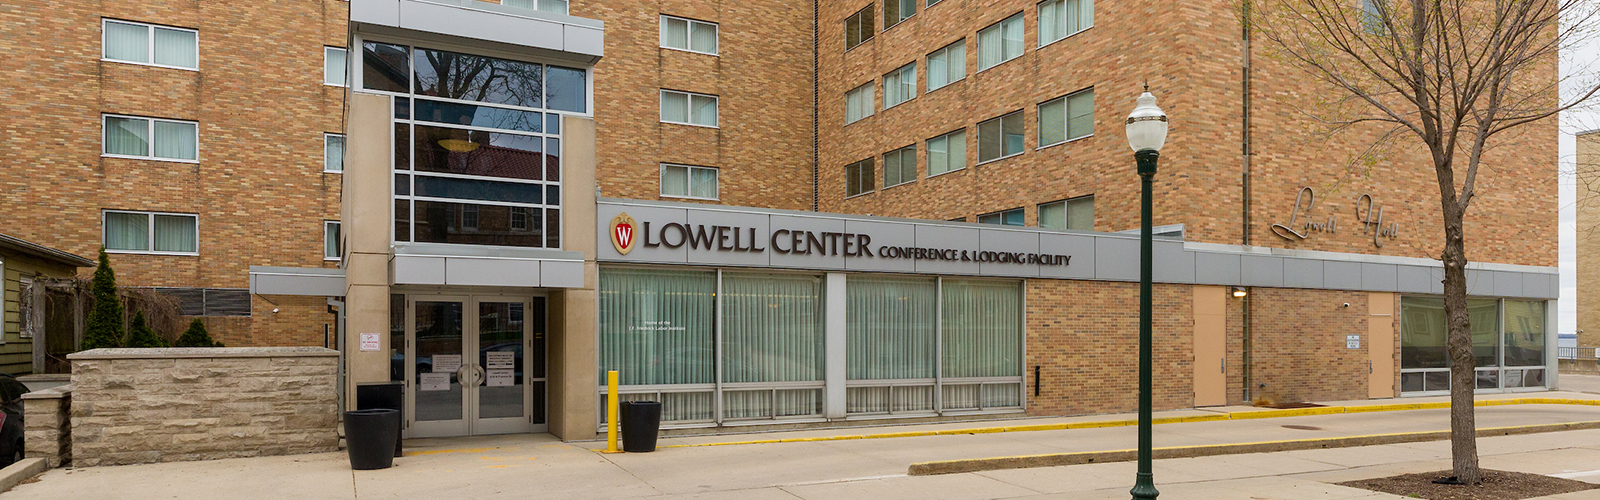 Lowell Center exterior